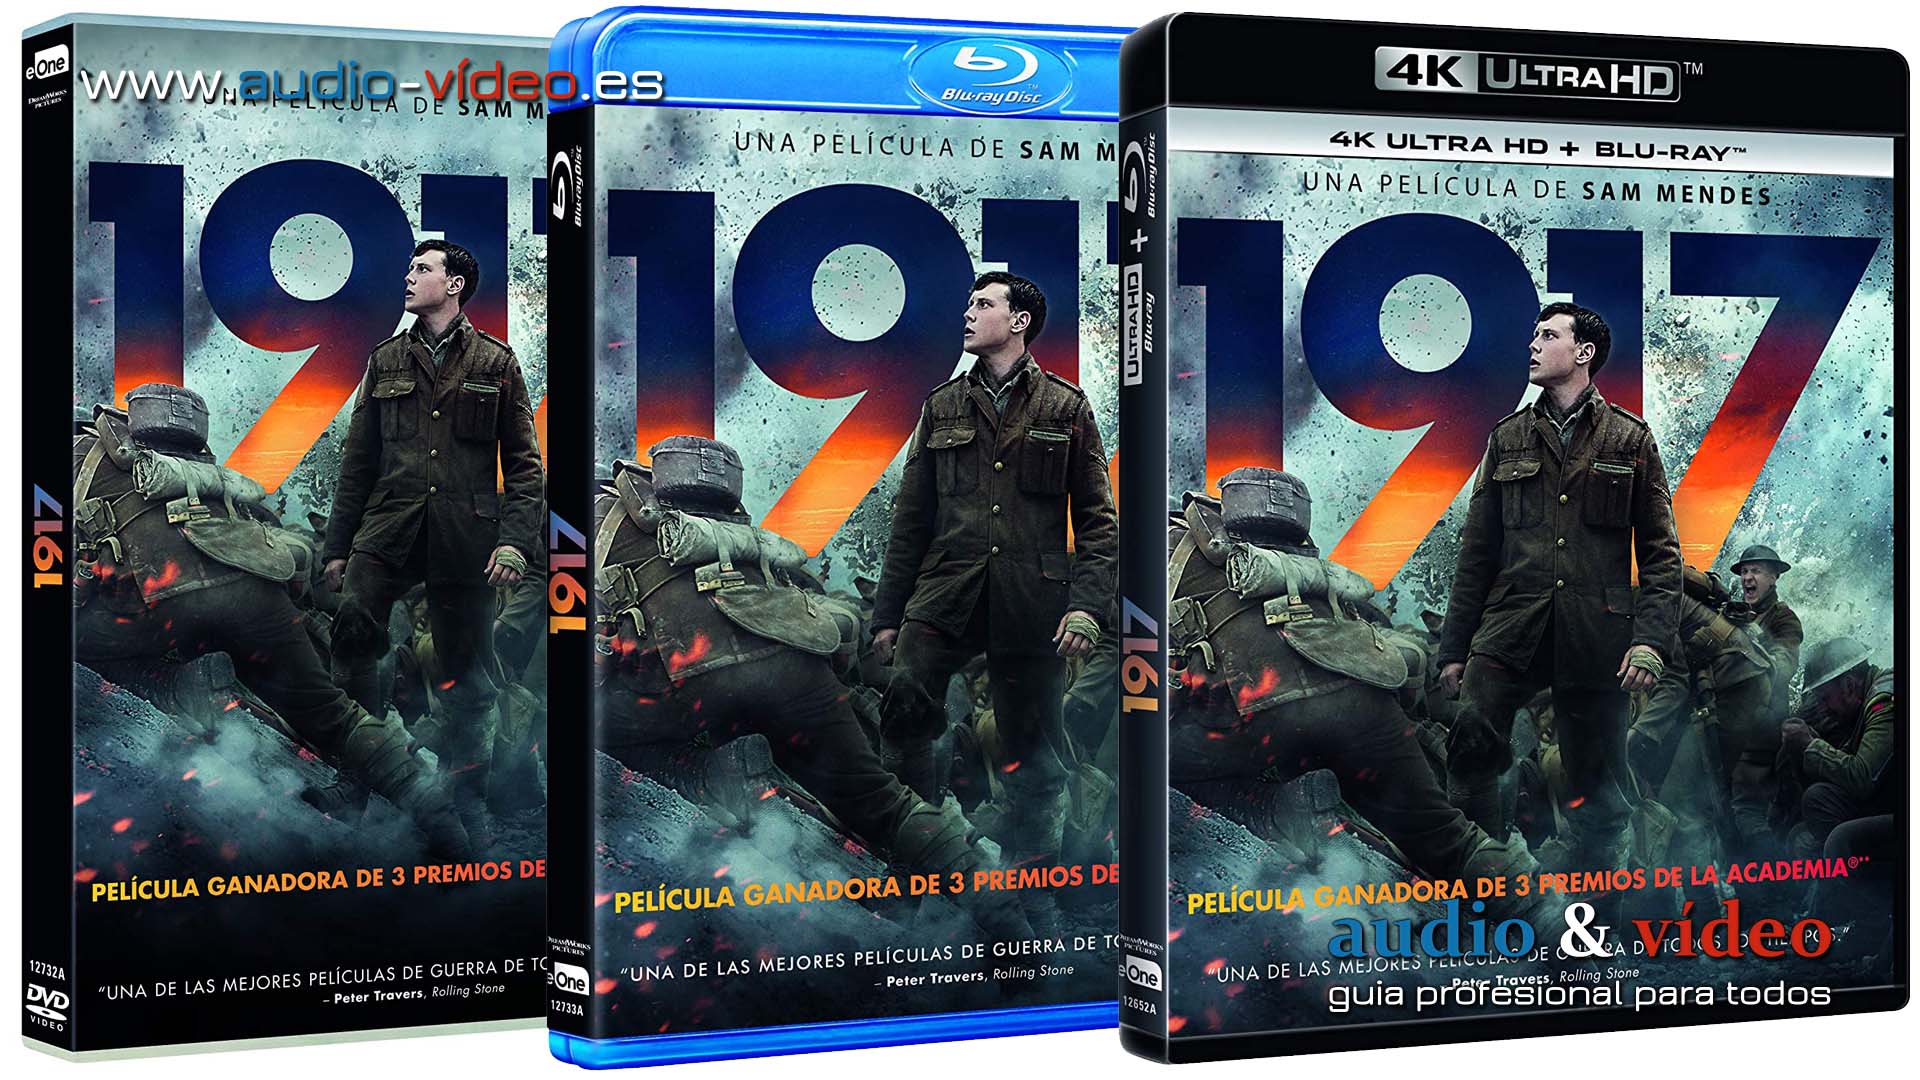 ▷1917 - 4K,UHD, BluRay y DVD ◁▷Audio/Video◁▷ audiovideo.com.es ◁